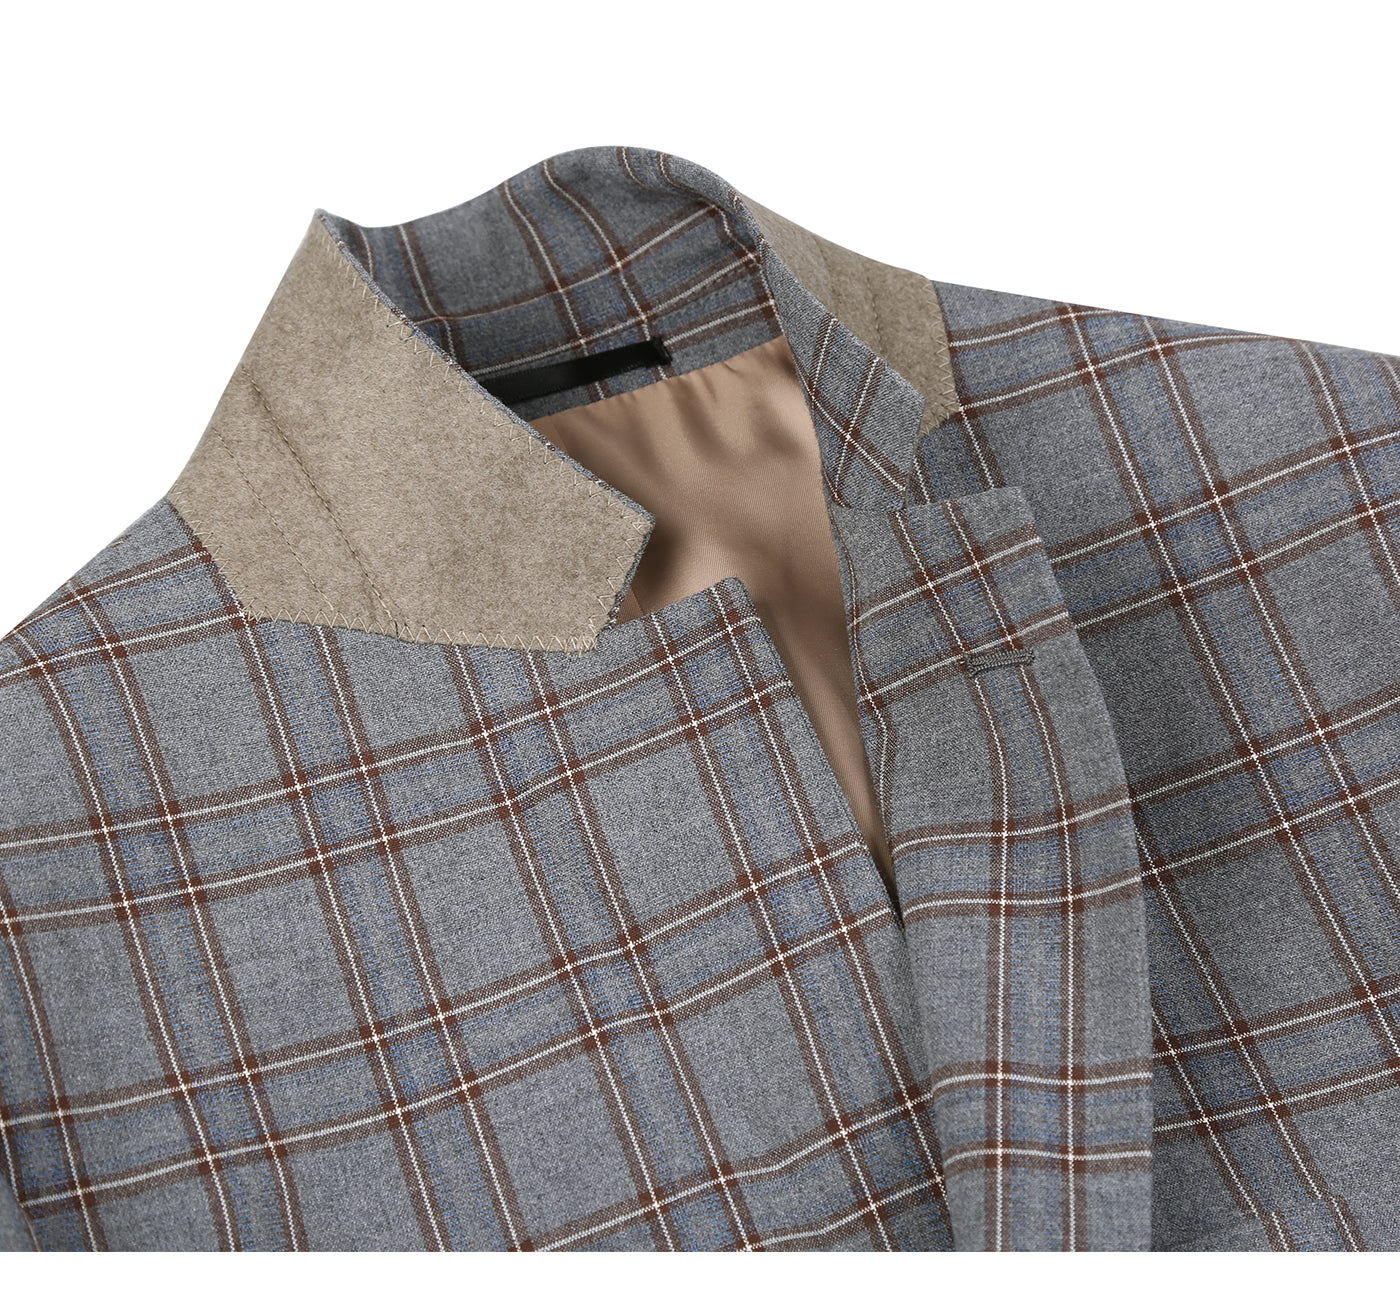 293-7 Men's Two Piece Slim Fit Stretch Windowpane Check Dress Suit